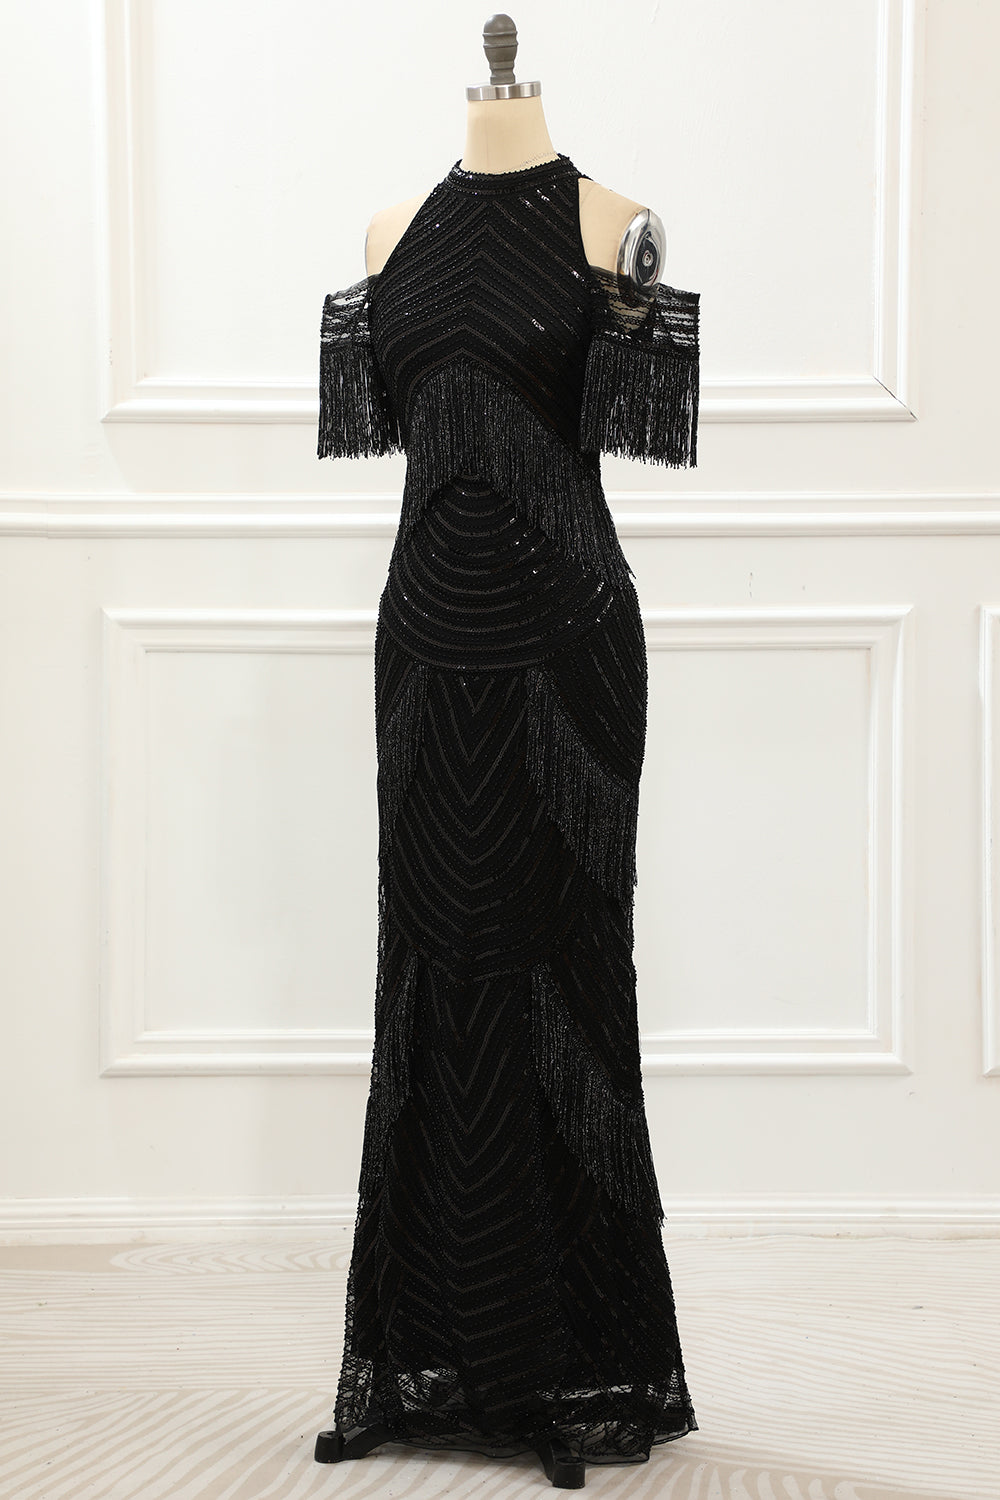 Simple Dress, Black Halter Sequin Glitter Prom Dress with Fringes